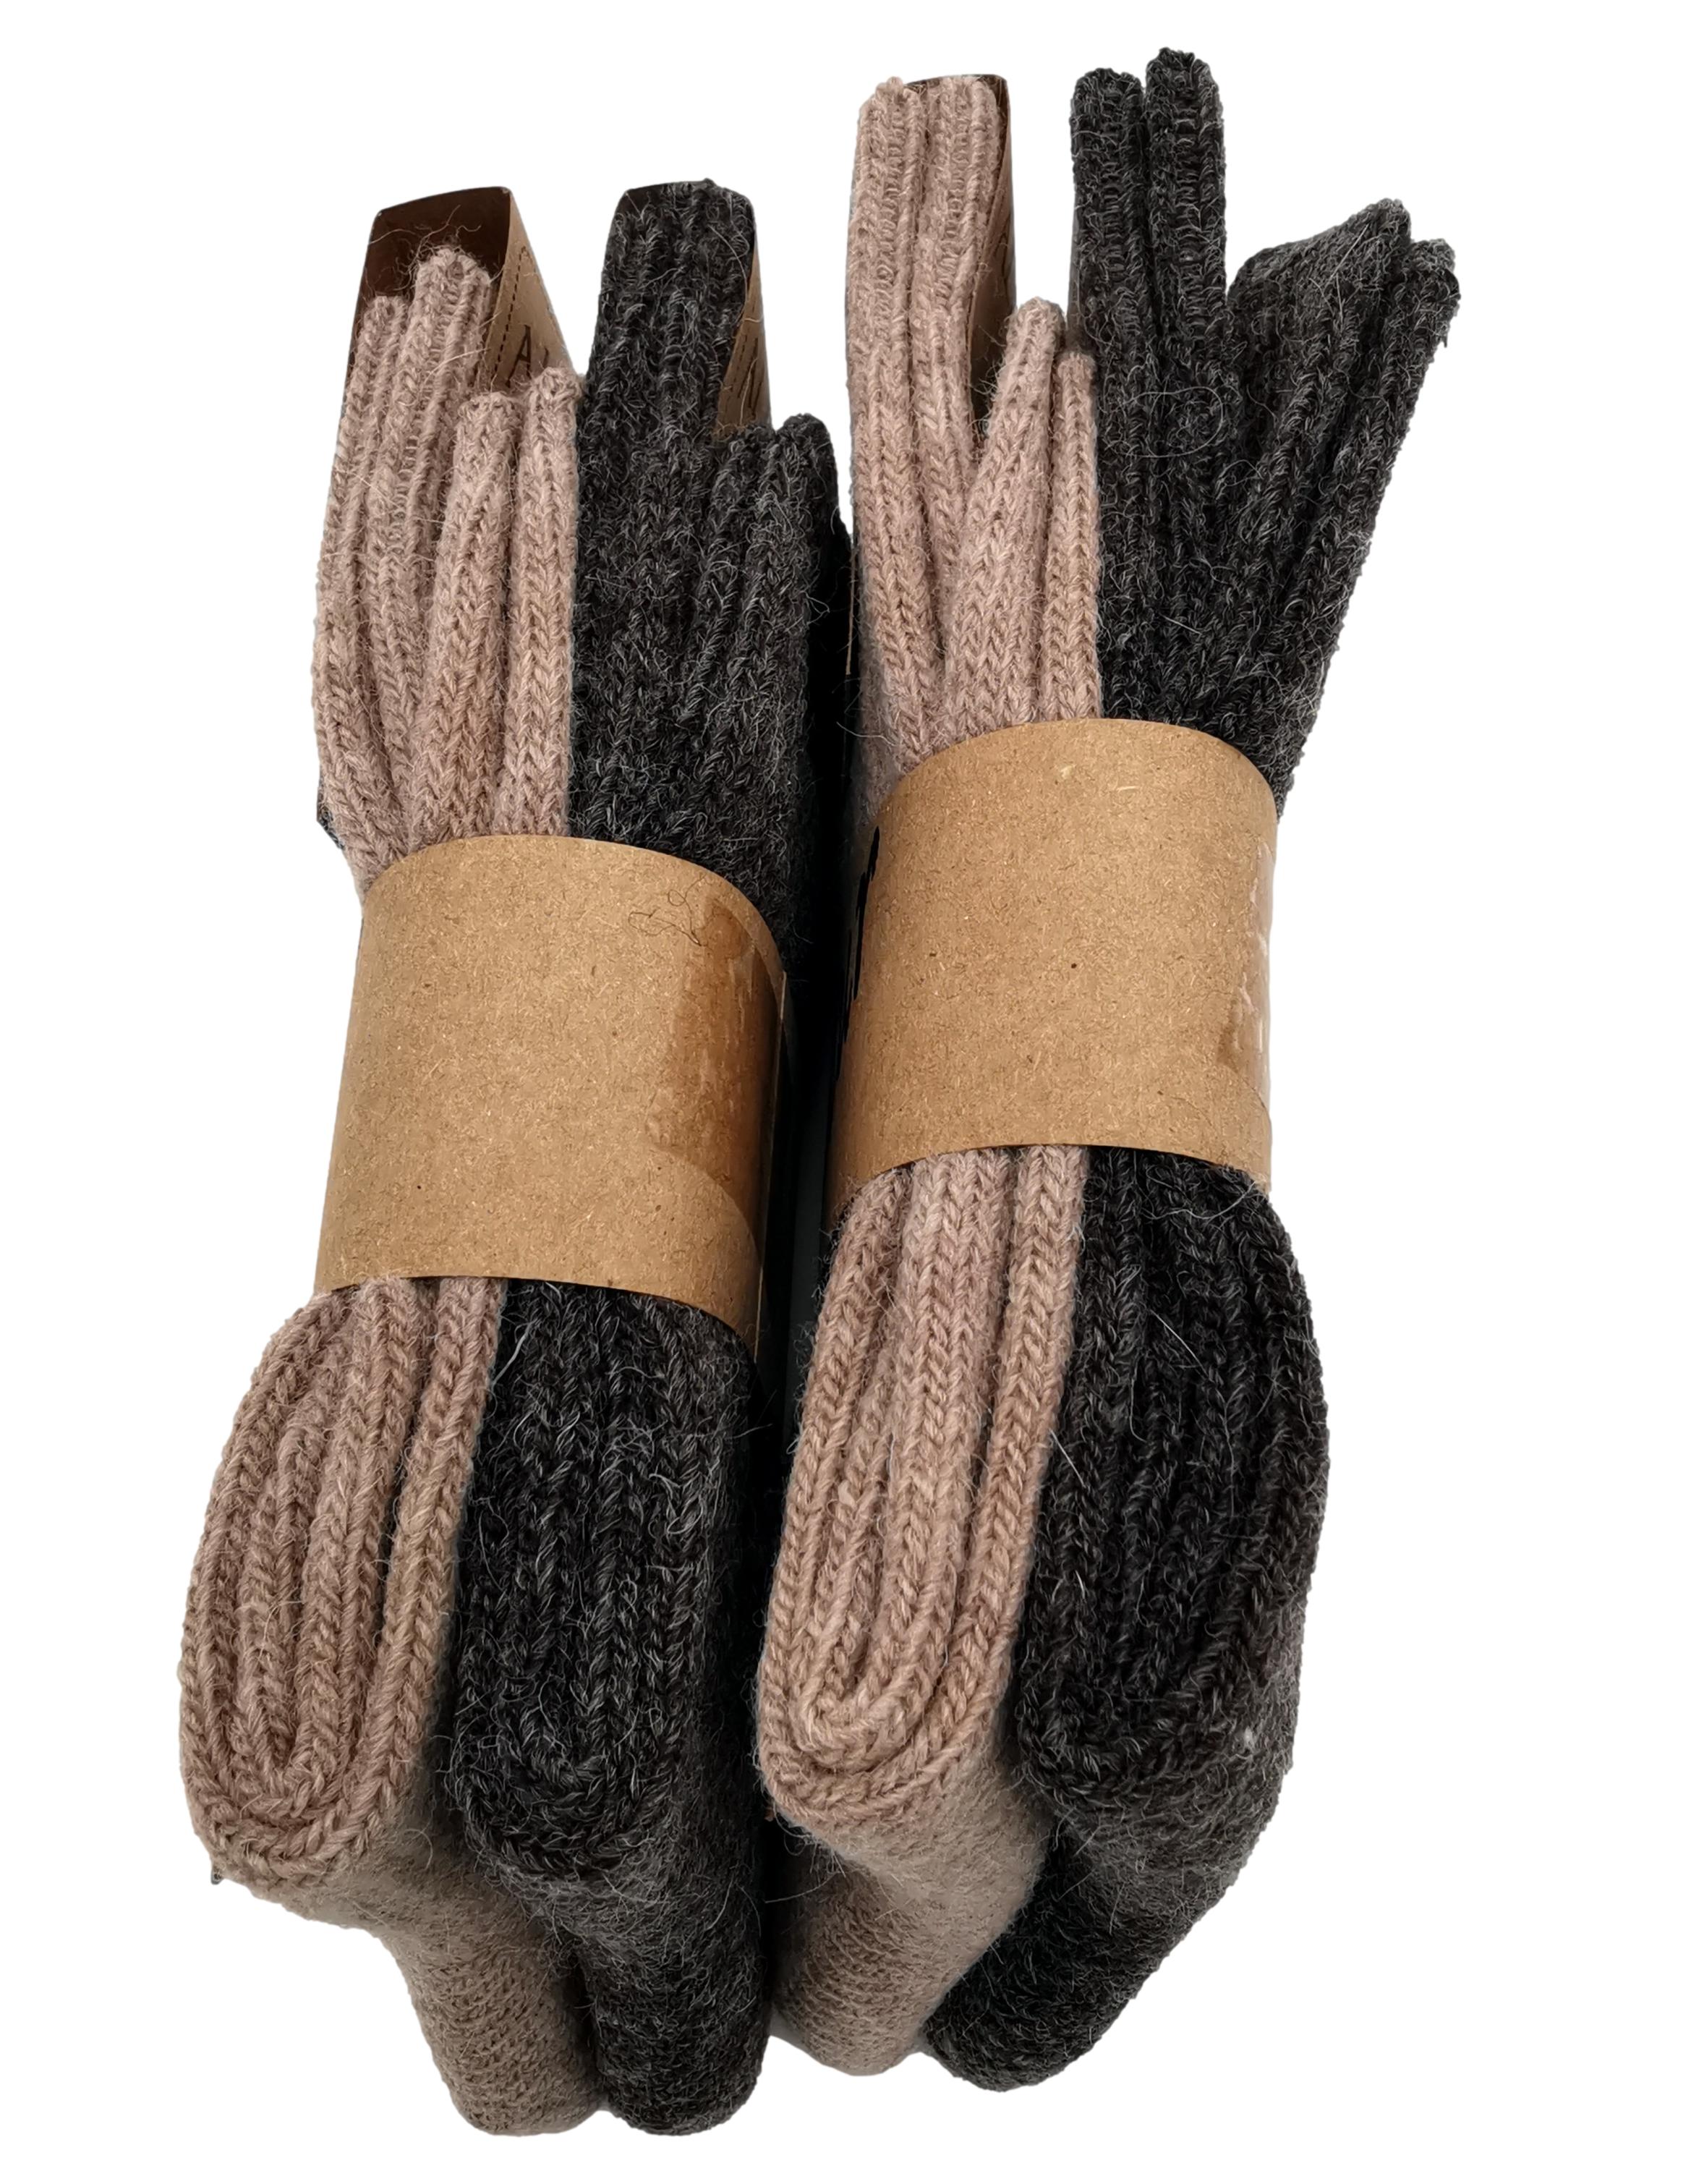 ALPAKASHOP-BAYERN | 2 Paar Alpaka-Socken fein gestrickt